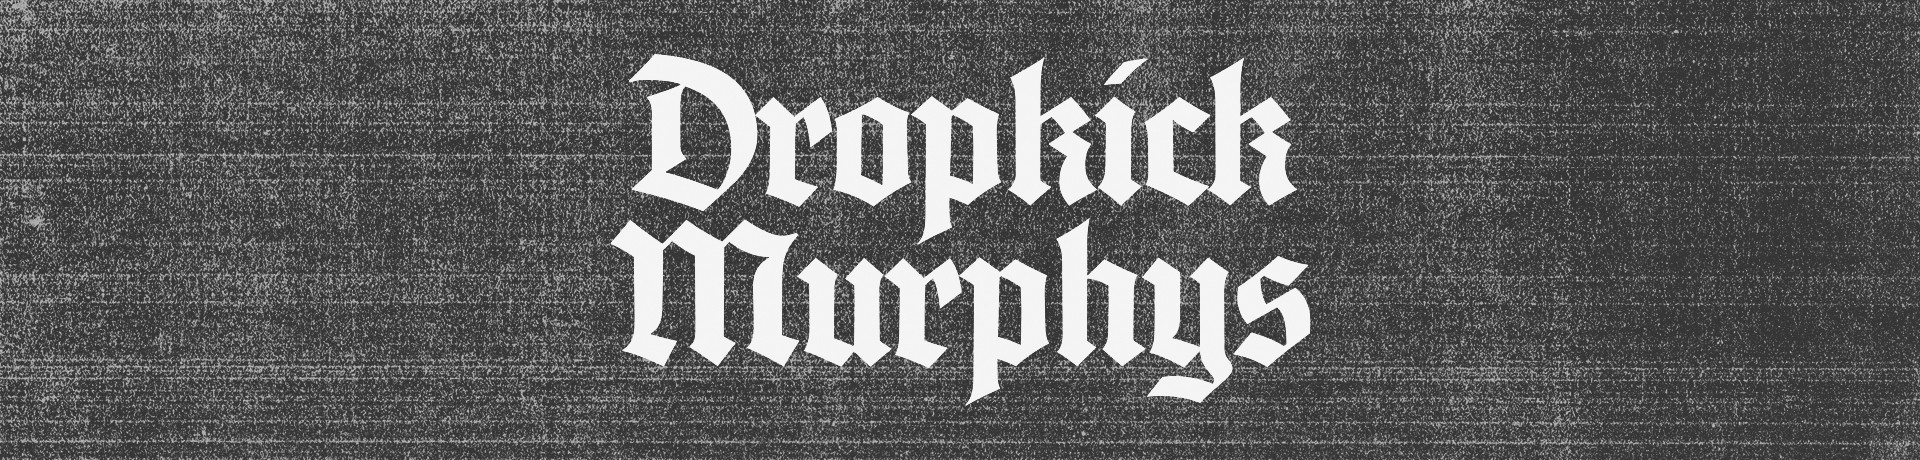 Dropkick Murphys - Turn Up That Dial Cover